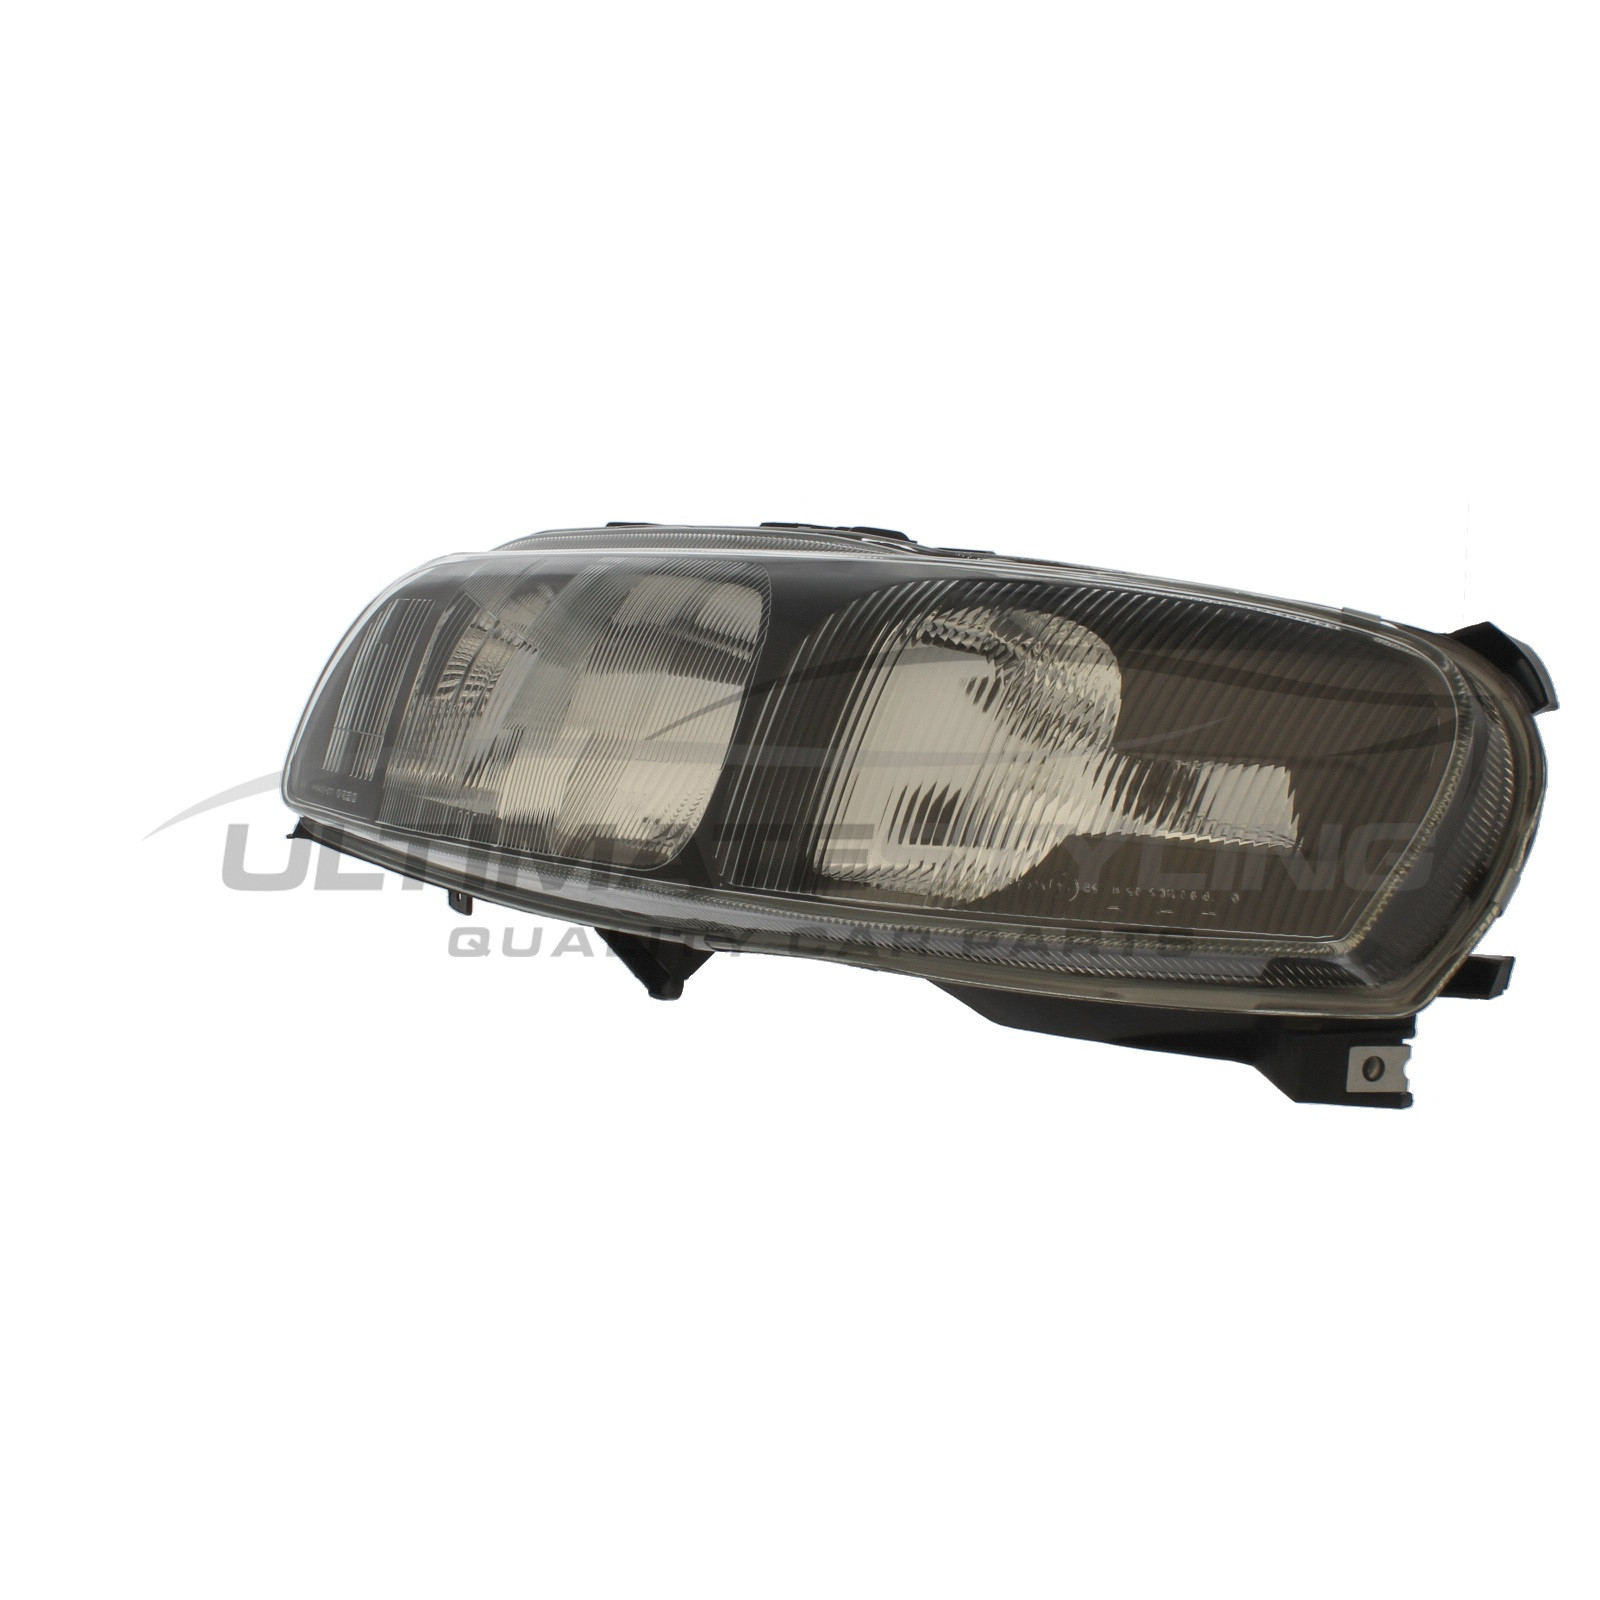 Volvo V70 / XC70 Headlight / Headlamp - Passenger Side (LH) - Halogen